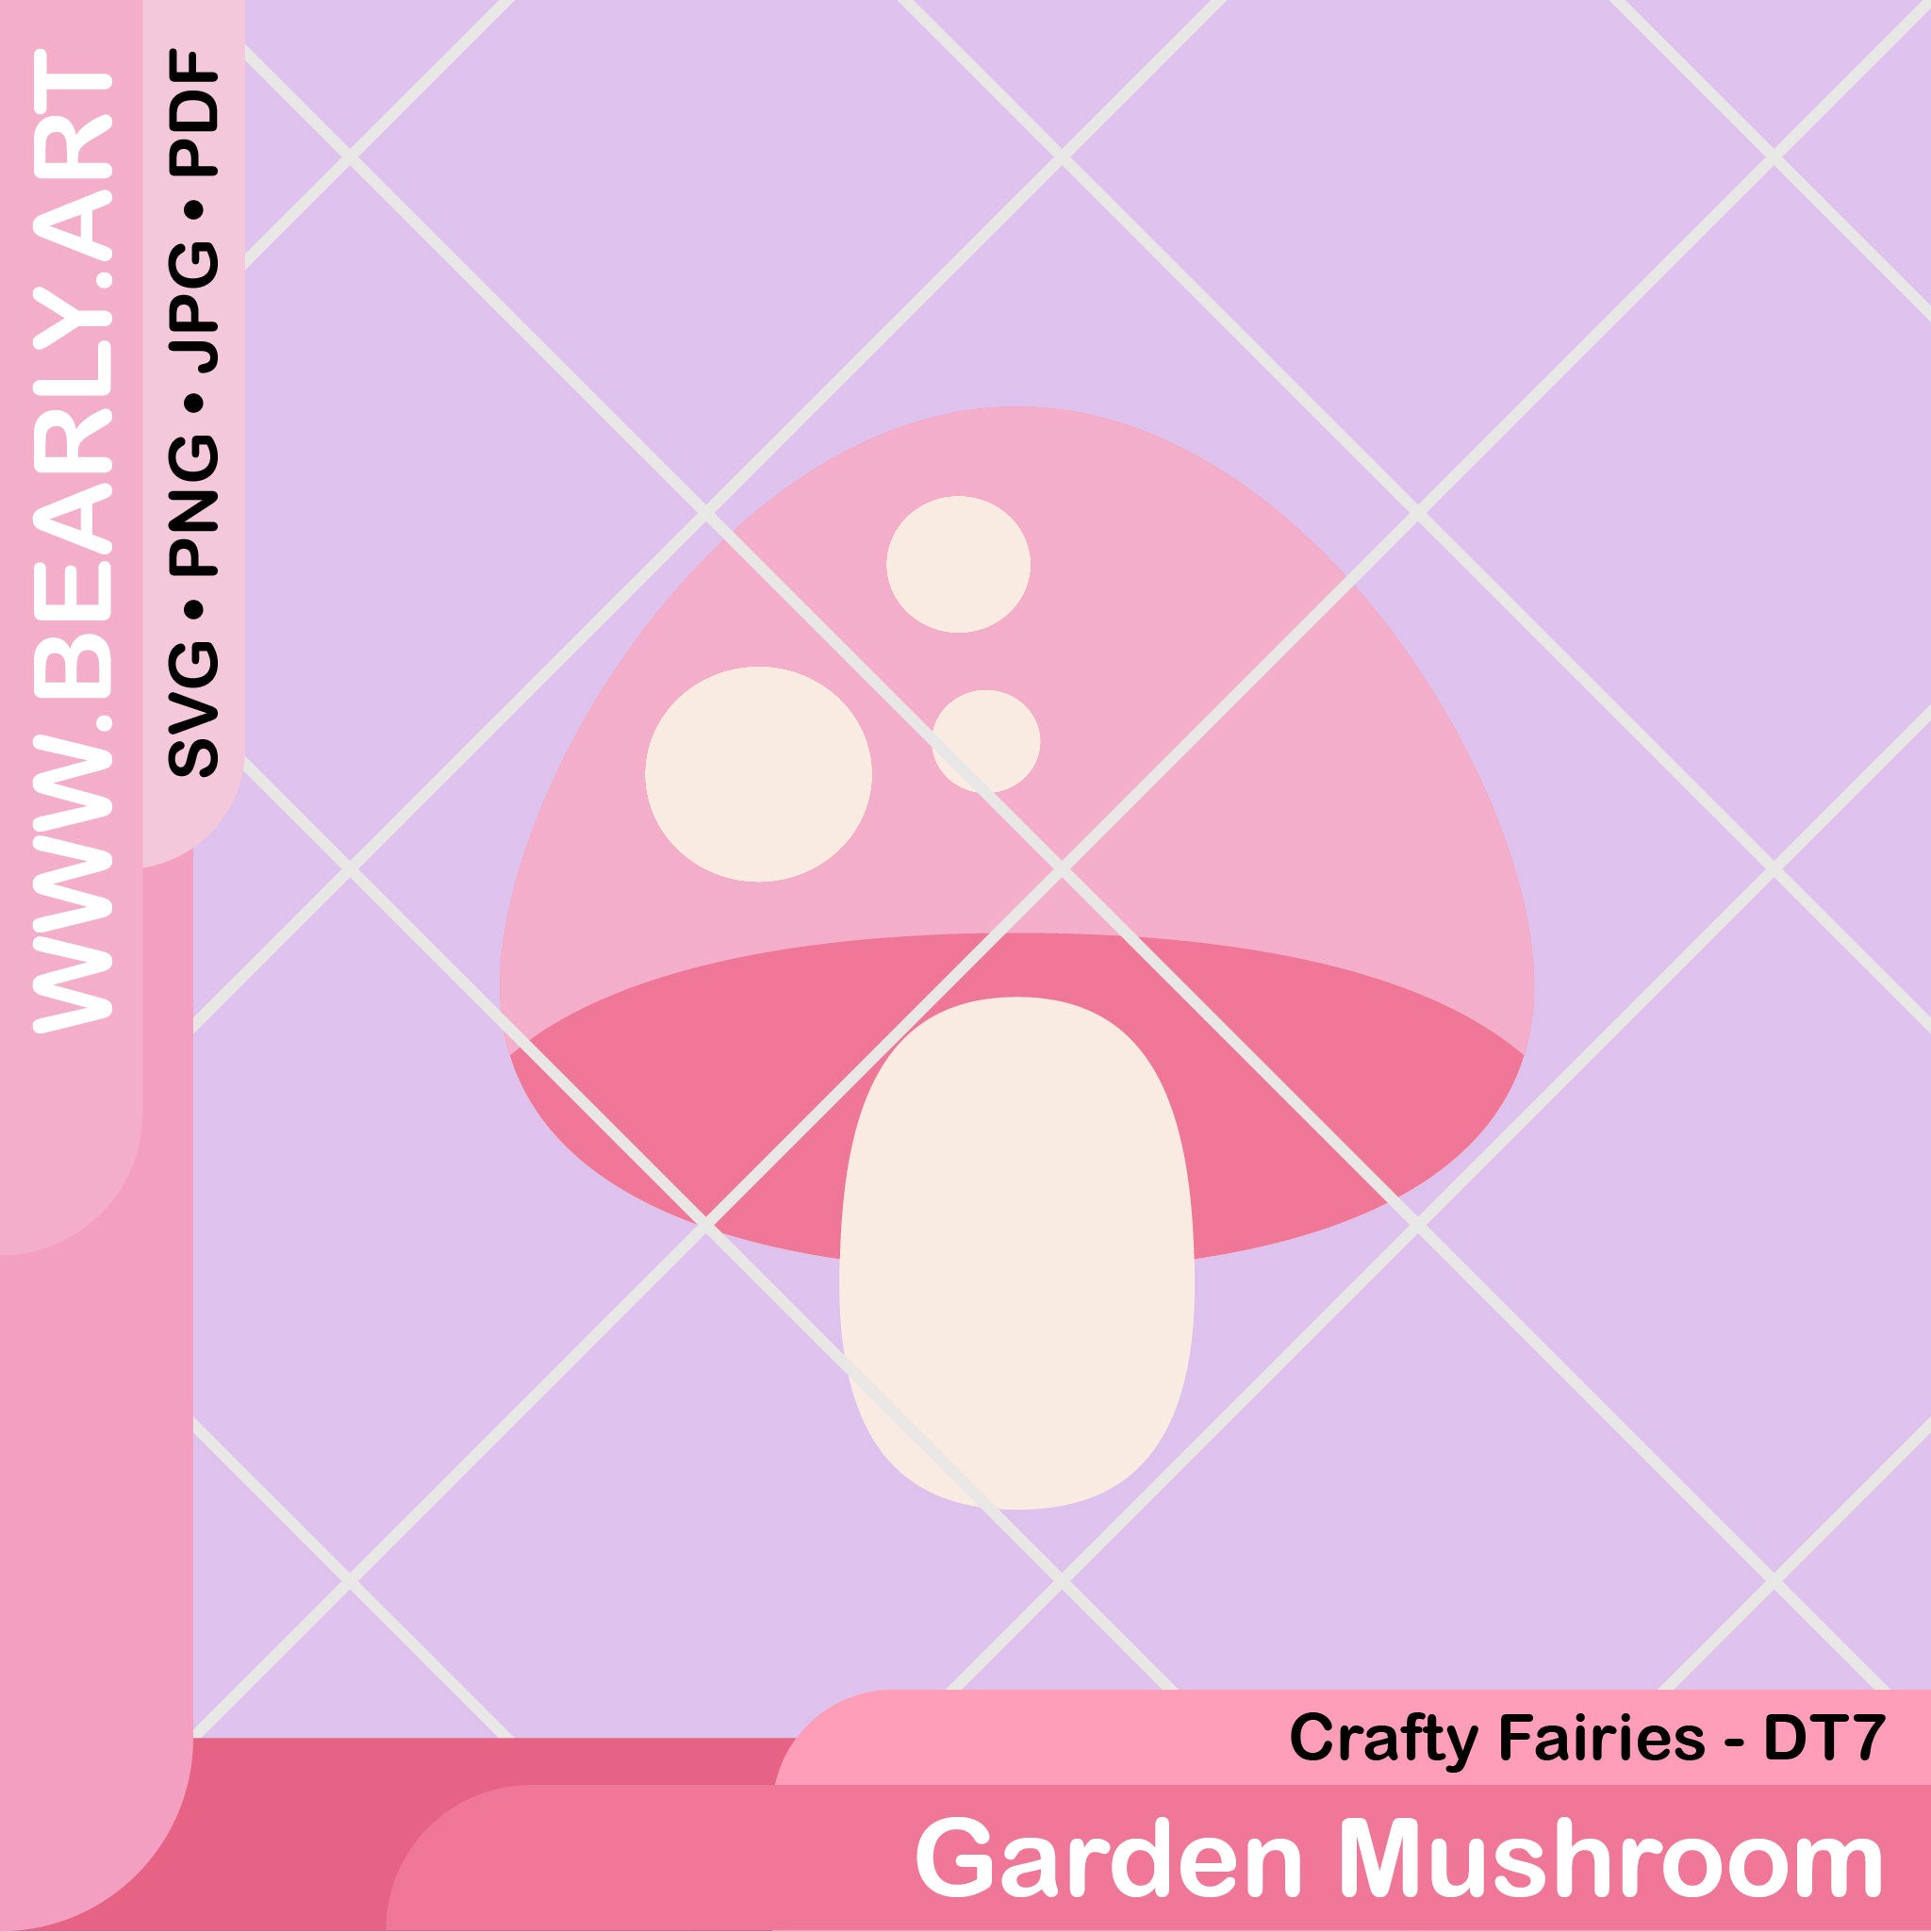 Garden Mushroom - Design Team 7 - Crafty Fairies